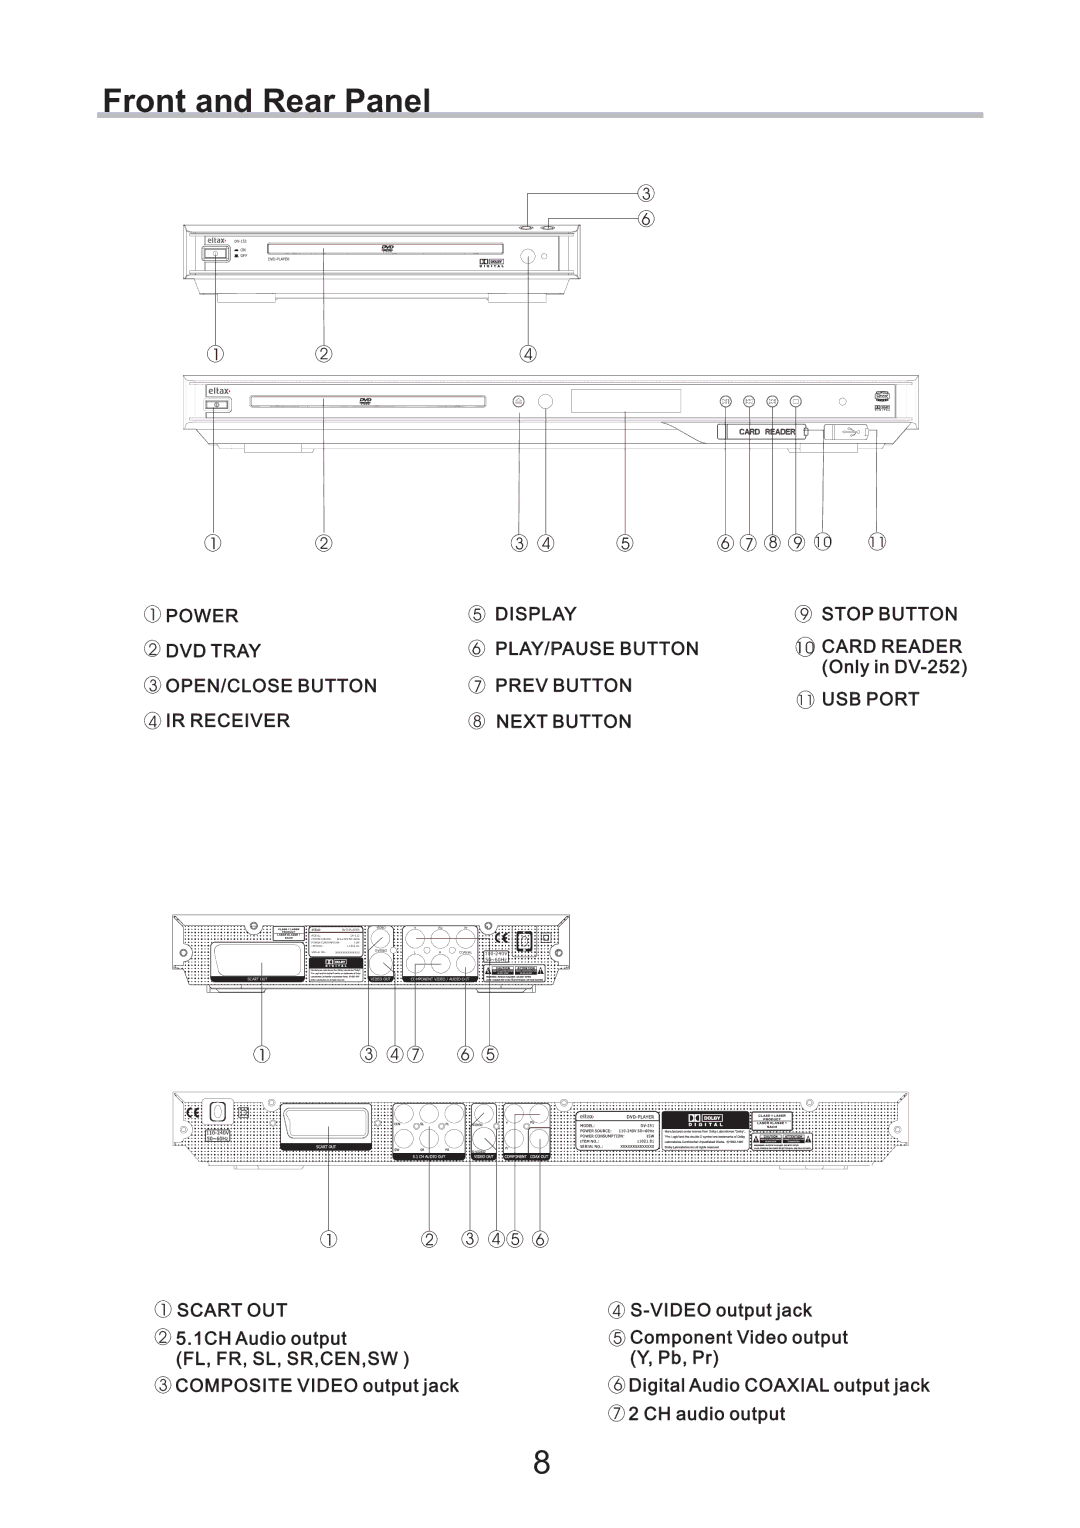 Eltax DV-252, CV-153, DV-251 instruction manual Front and Rear Panel 